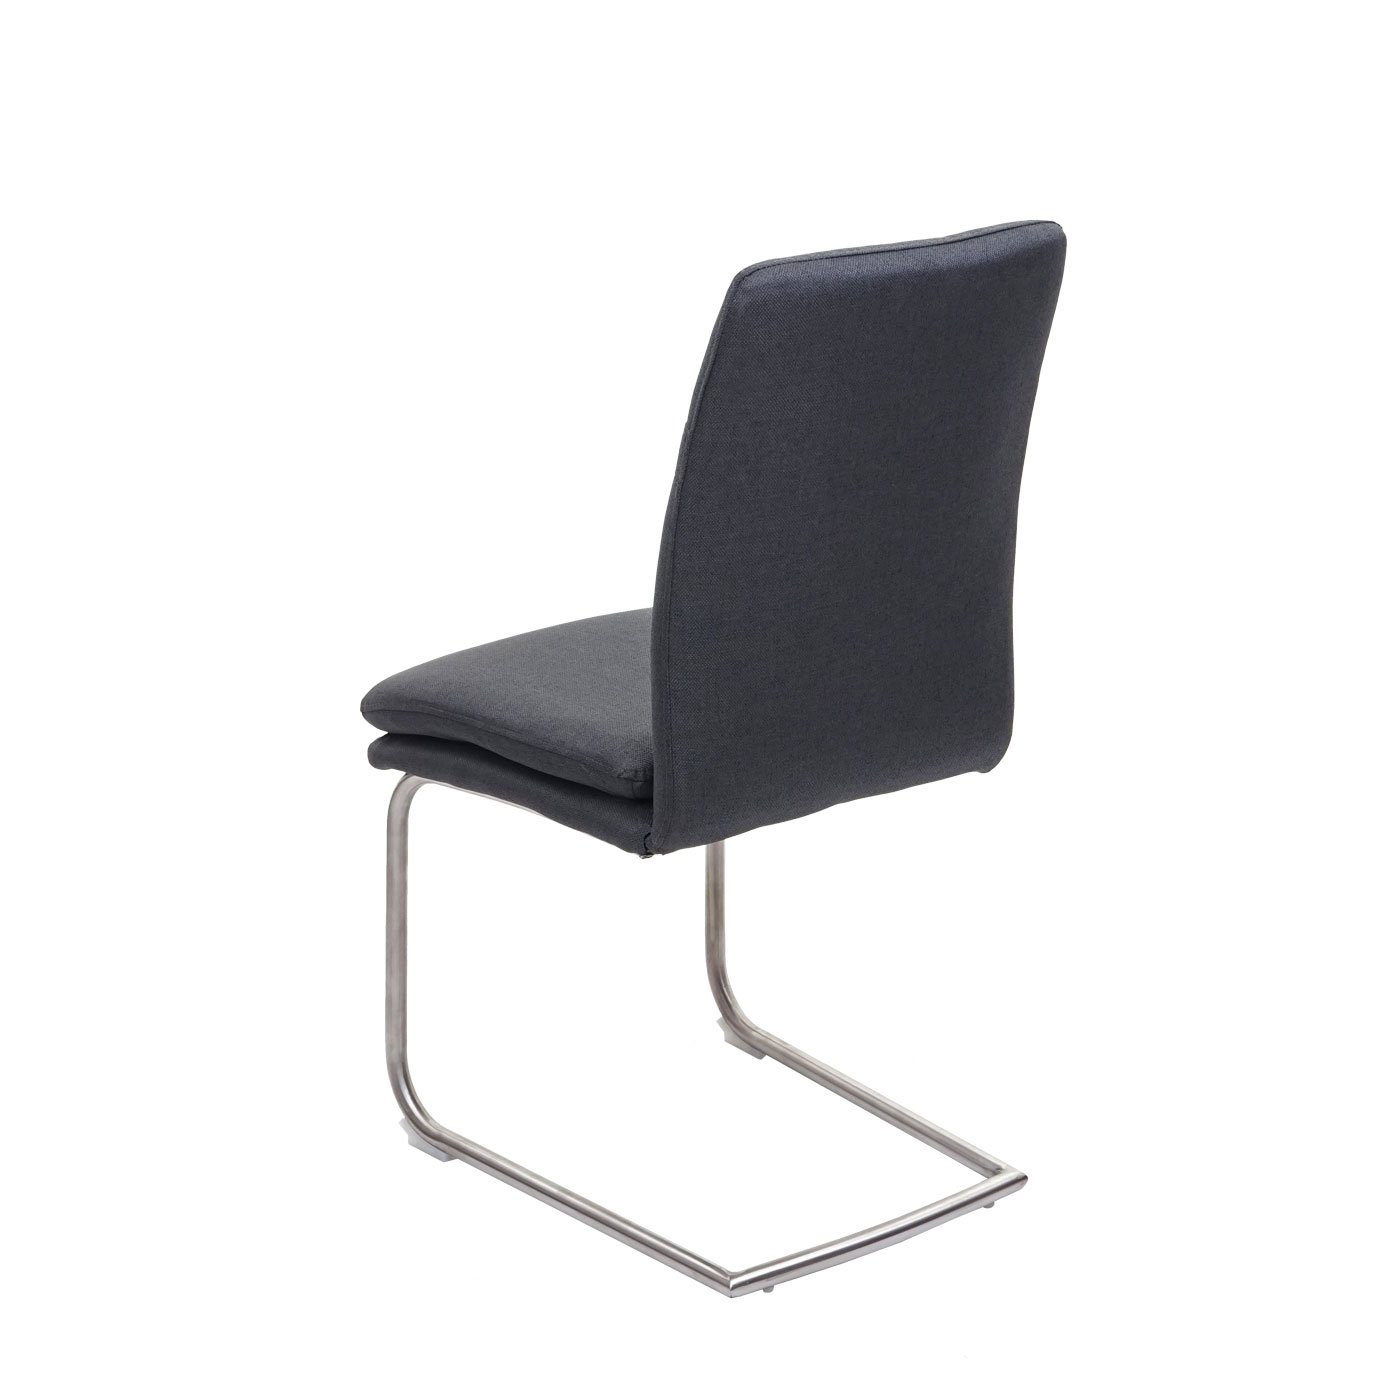 1 Tisch, Stühle, 4 MCW-H70-B, 1 Stabiles MCW Bequeme Gestell 5-tlg., Essgruppe (Set, Bank), dunkelgrau Formgebung,